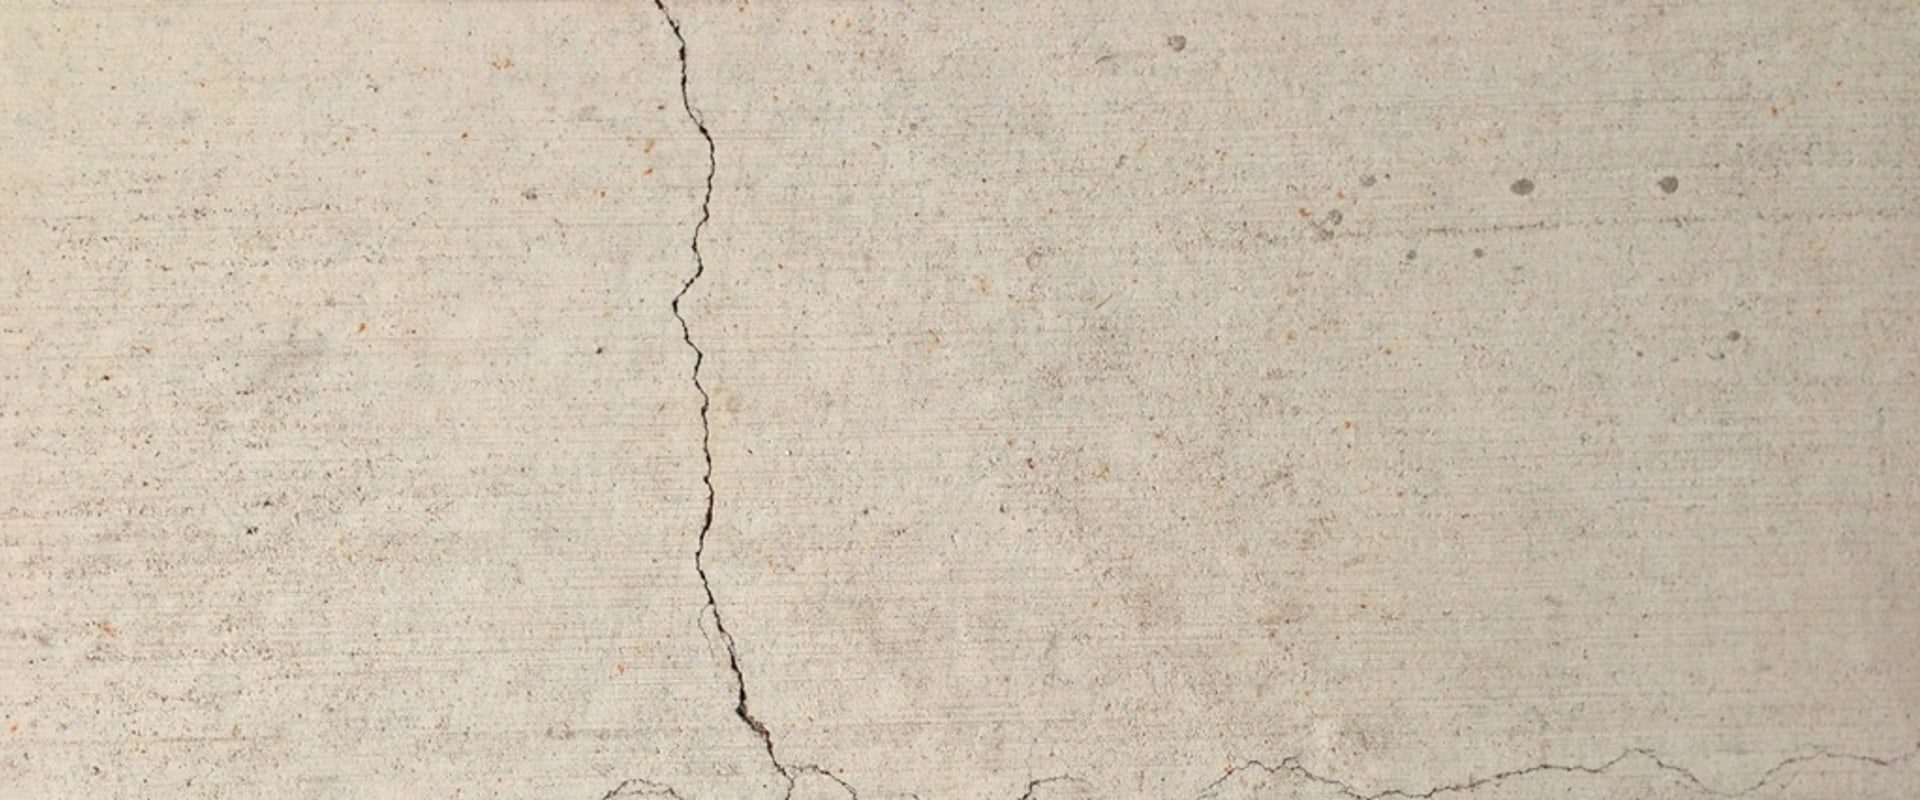 Should you fix fine cracks in concrete?